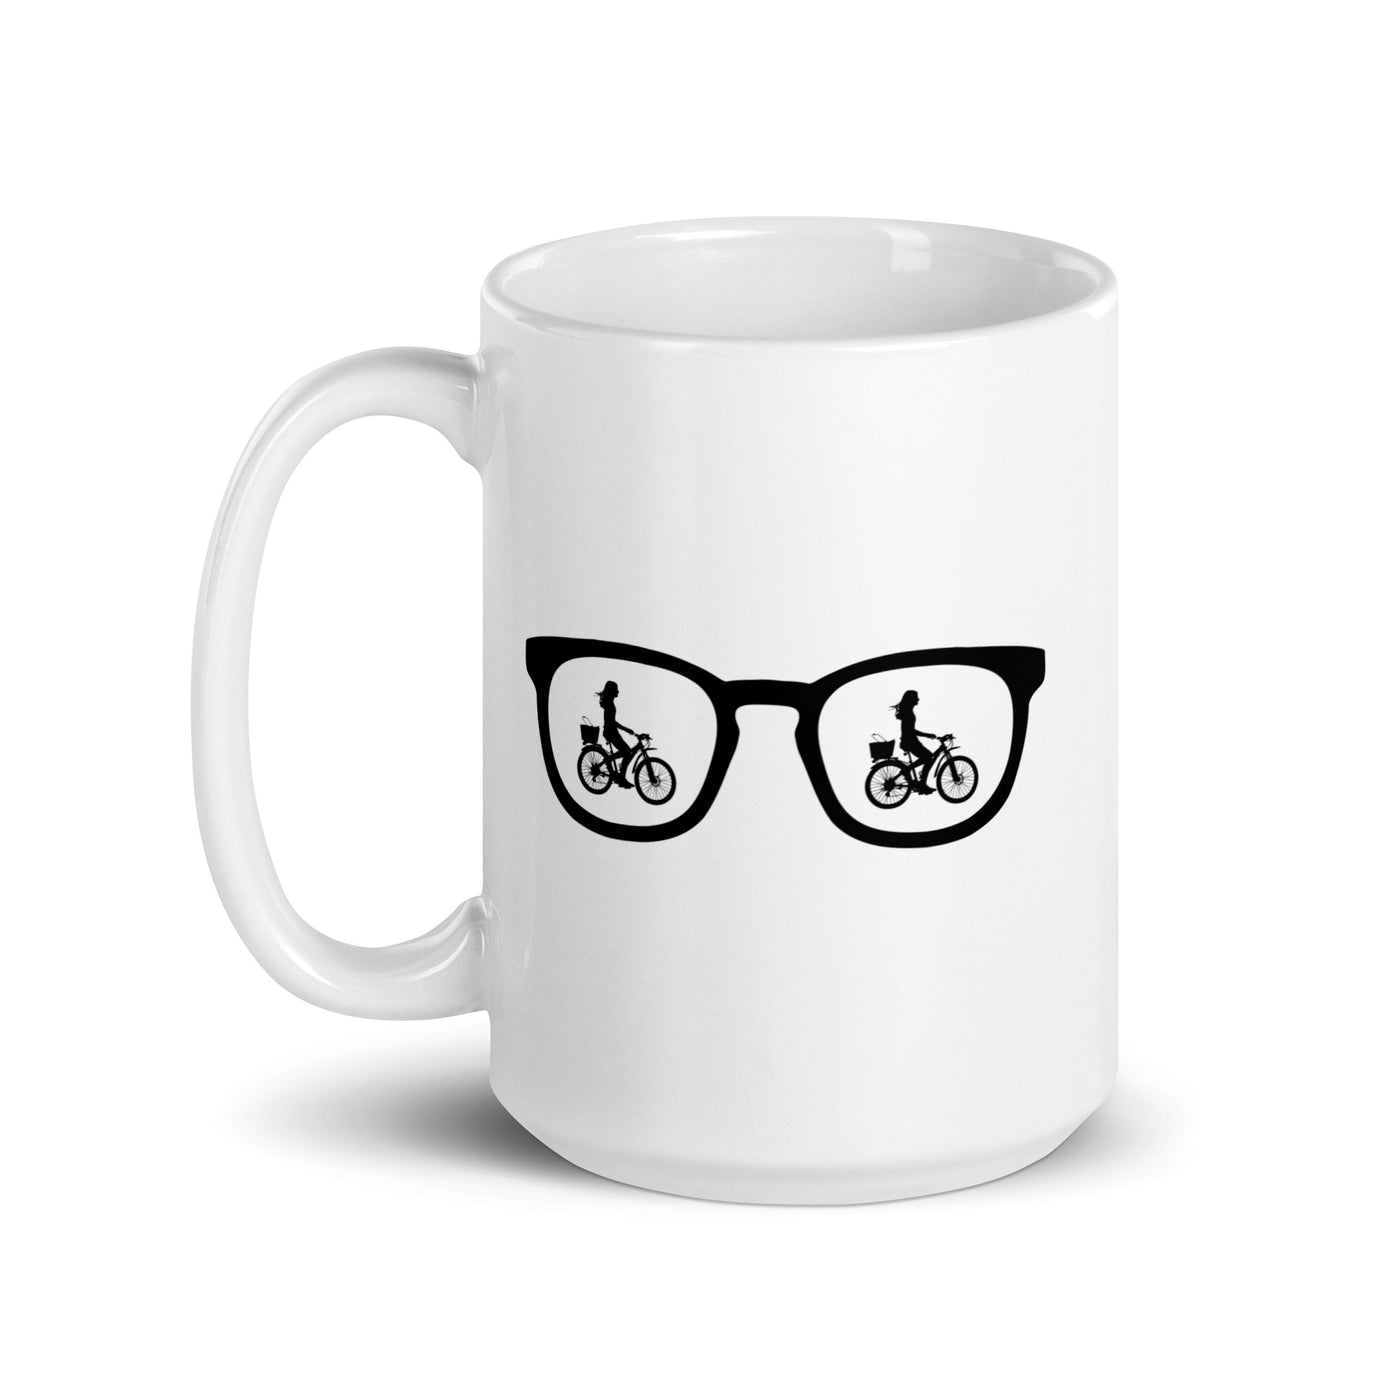 Sunglasses And Cycling 2 - Tasse fahrrad